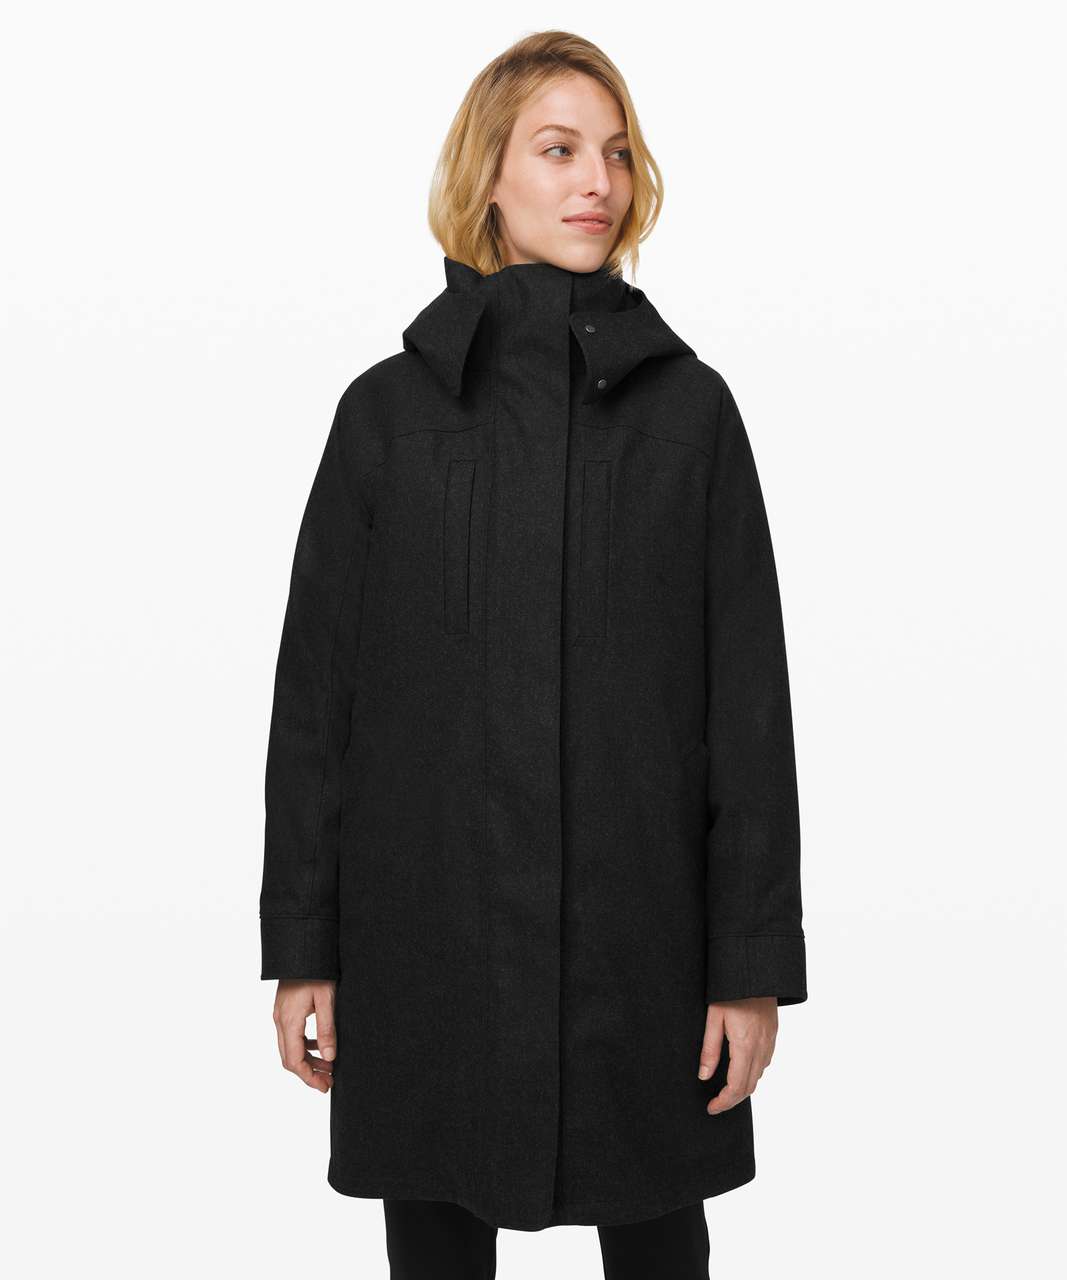 Lululemon Roam Far Wool 3-in-1 Jacket - Heathered Black / Black